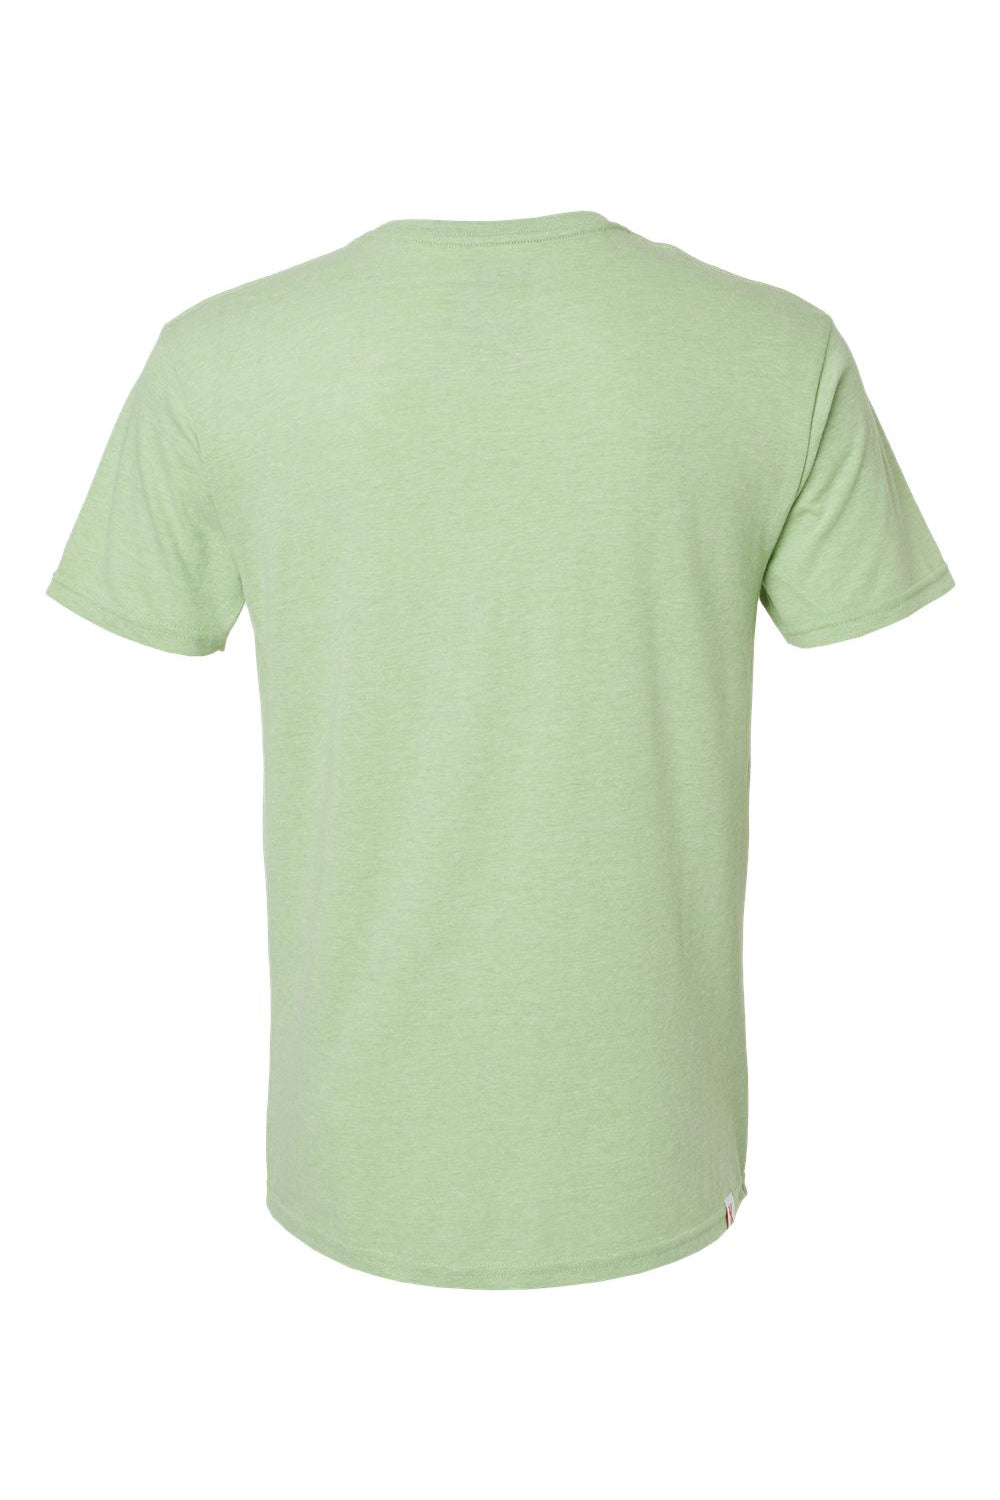 Kastlfel 2010 Mens RecycledSoft Short Sleve Crewneck T-Shirt Green Tea Flat Back